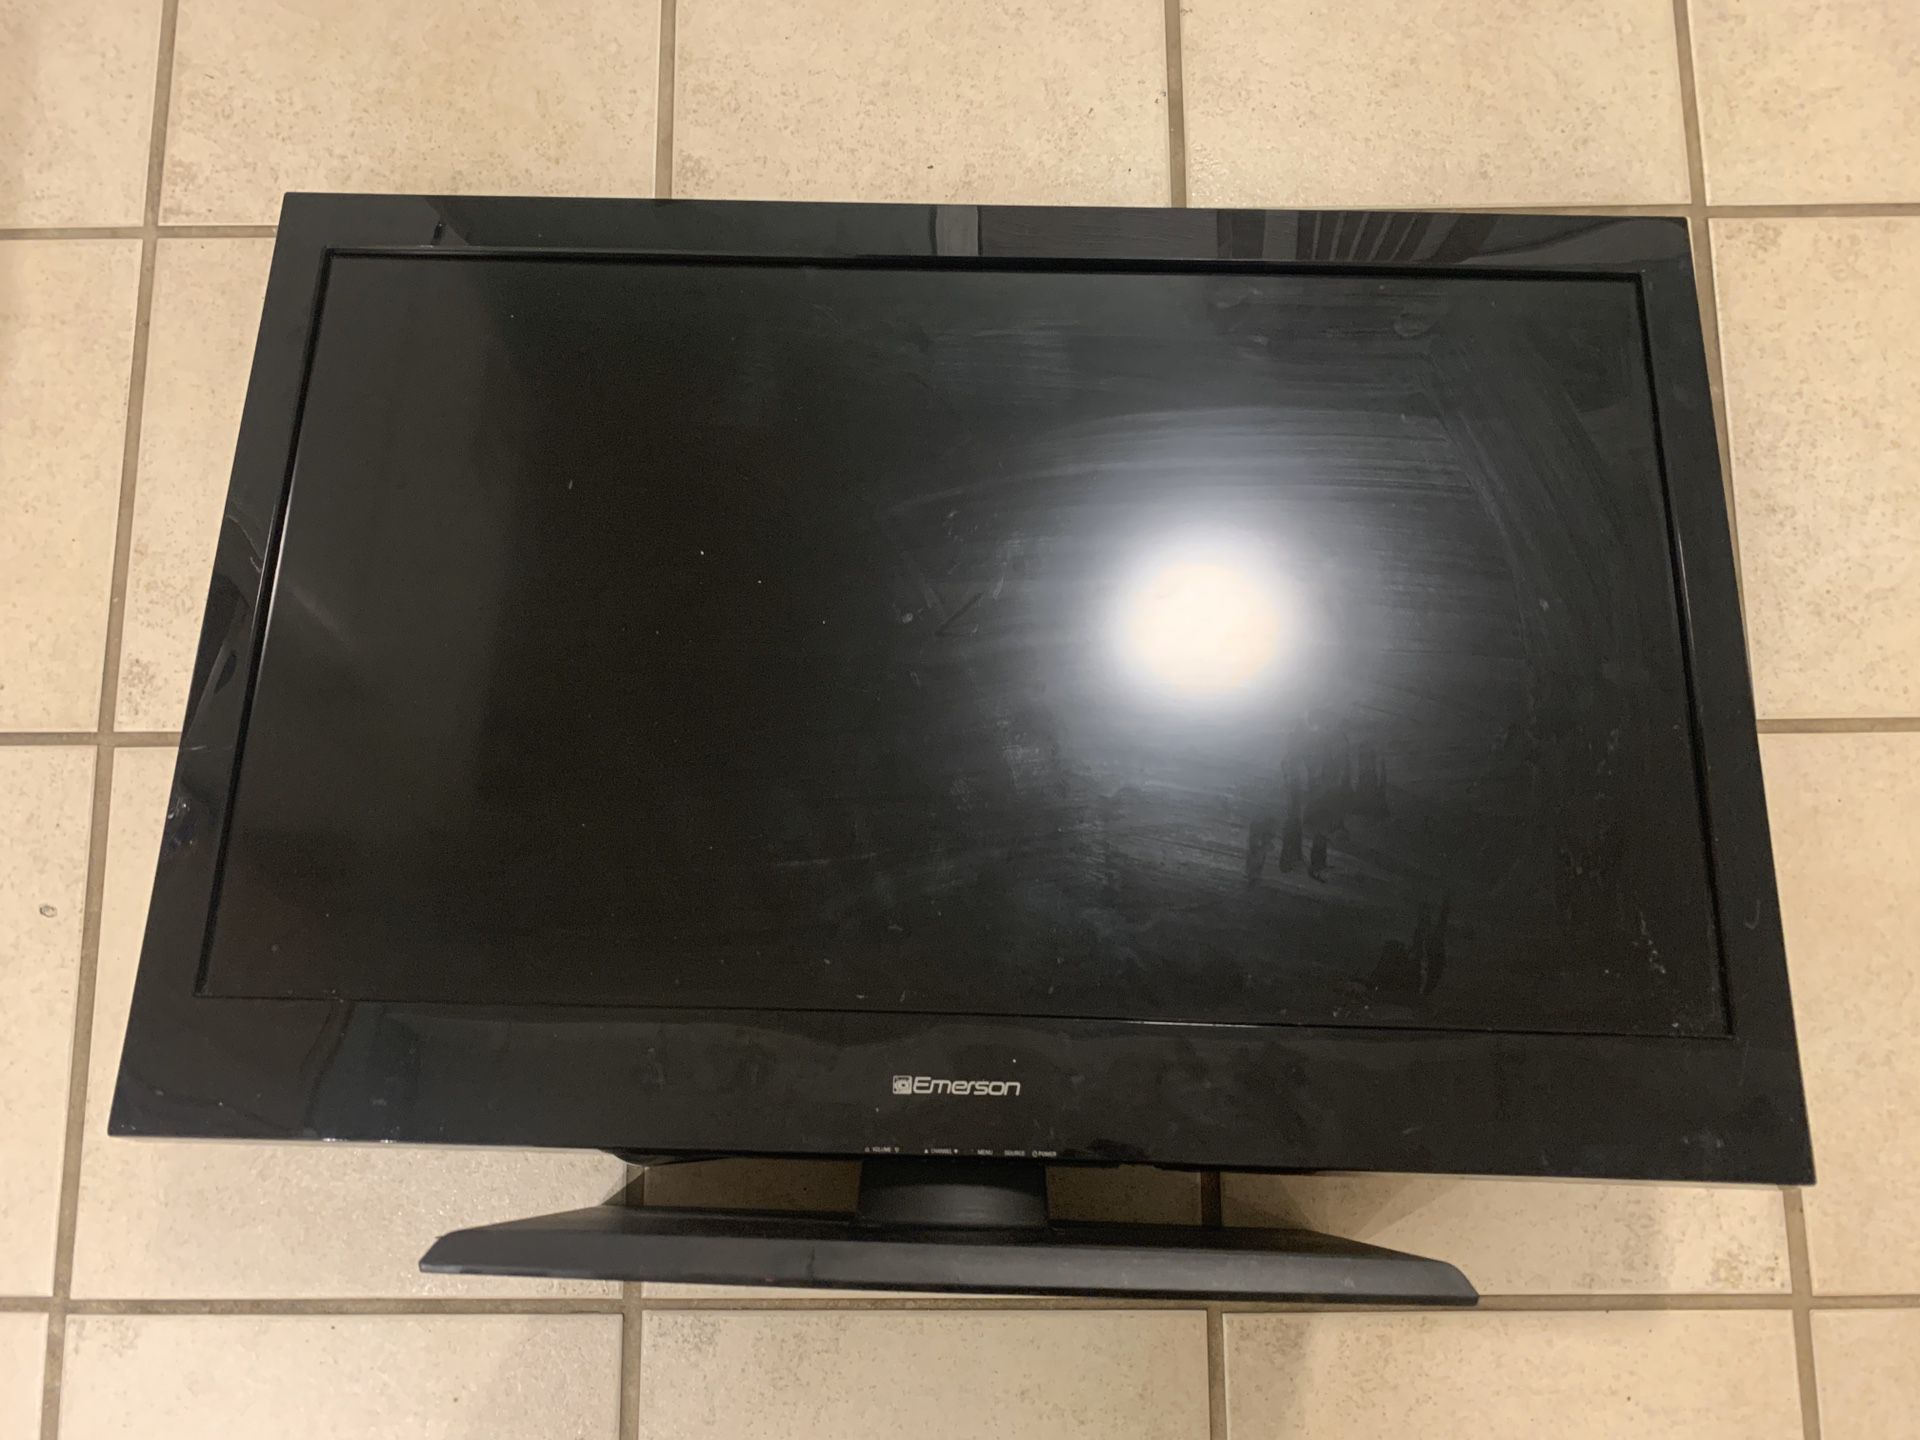 Emerson 32” LCD Flat Screen TV